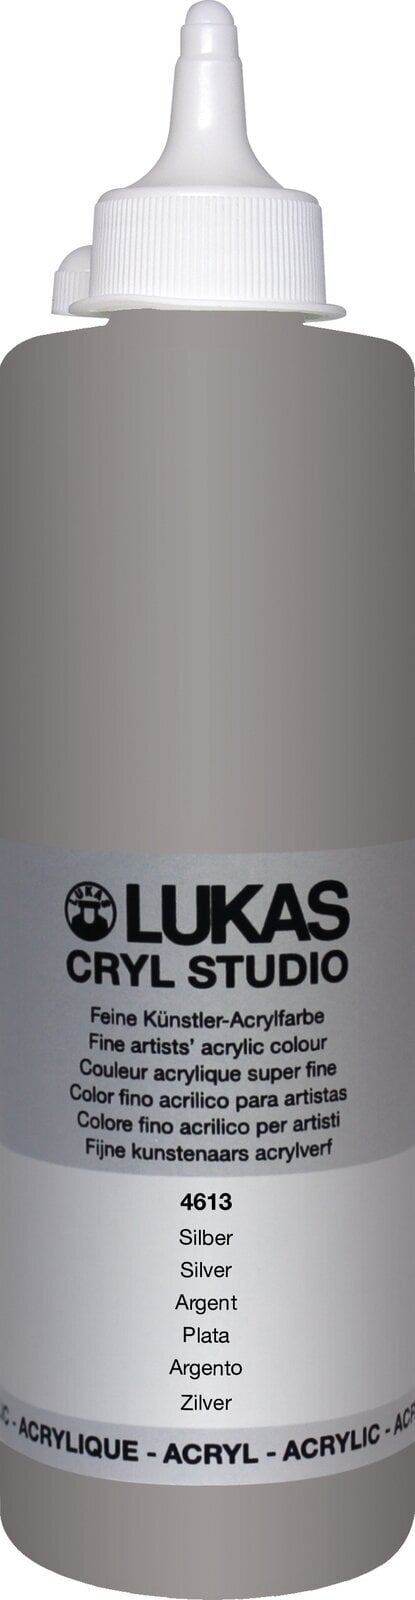 Akrylová barva Lukas Cryl Studio Akrylová barva 500 ml Stříbrná